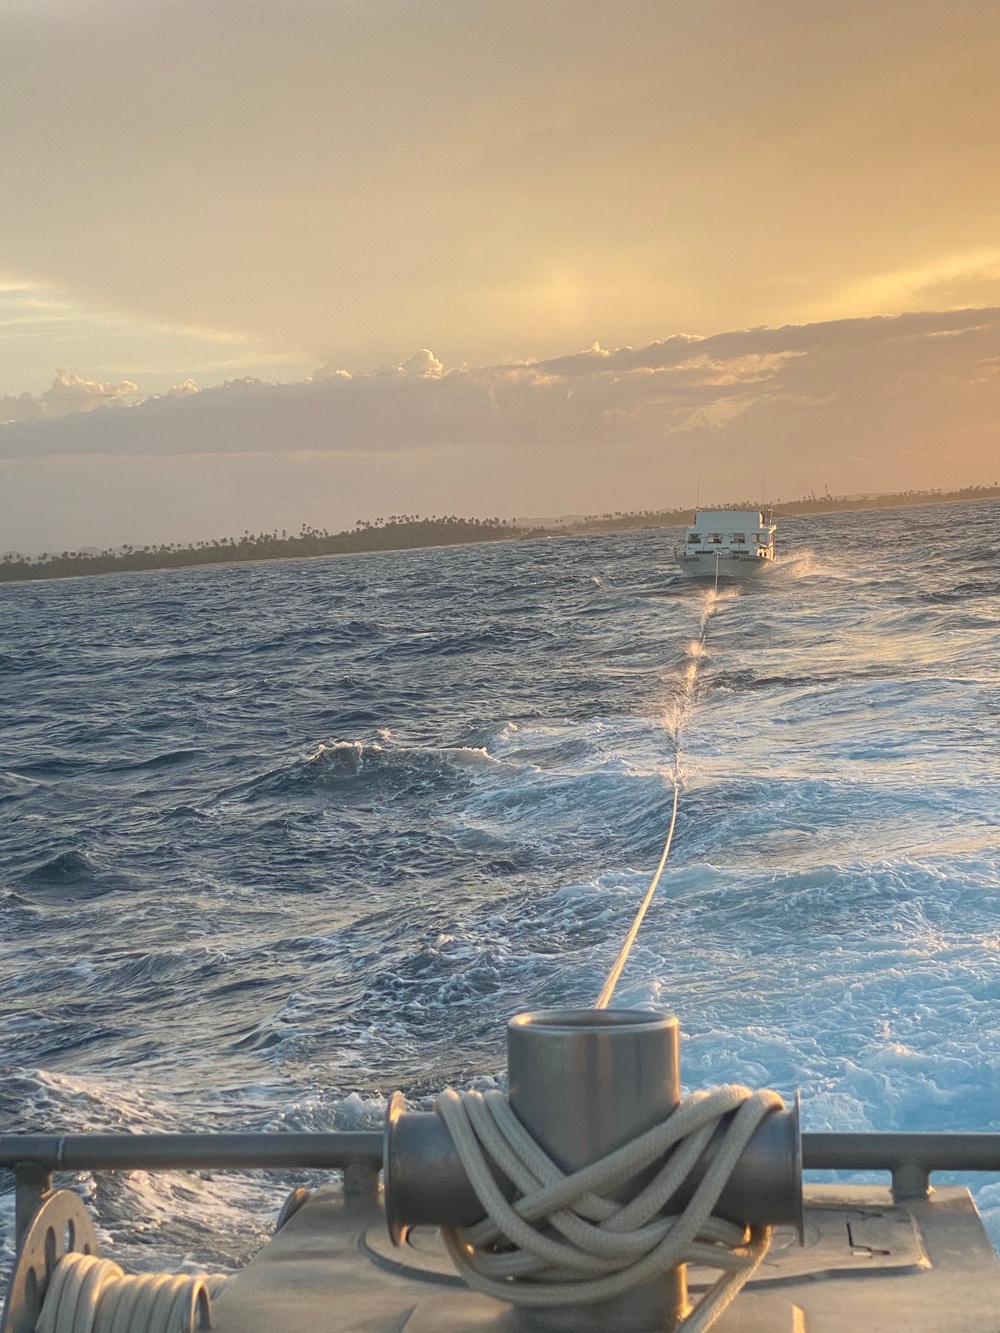 Coast Guard Boat Station San Juan rescues 1 Grenadian, 1 Bahamian aboard disabled and adrift vessel off Vega Baja, Puerto Rico